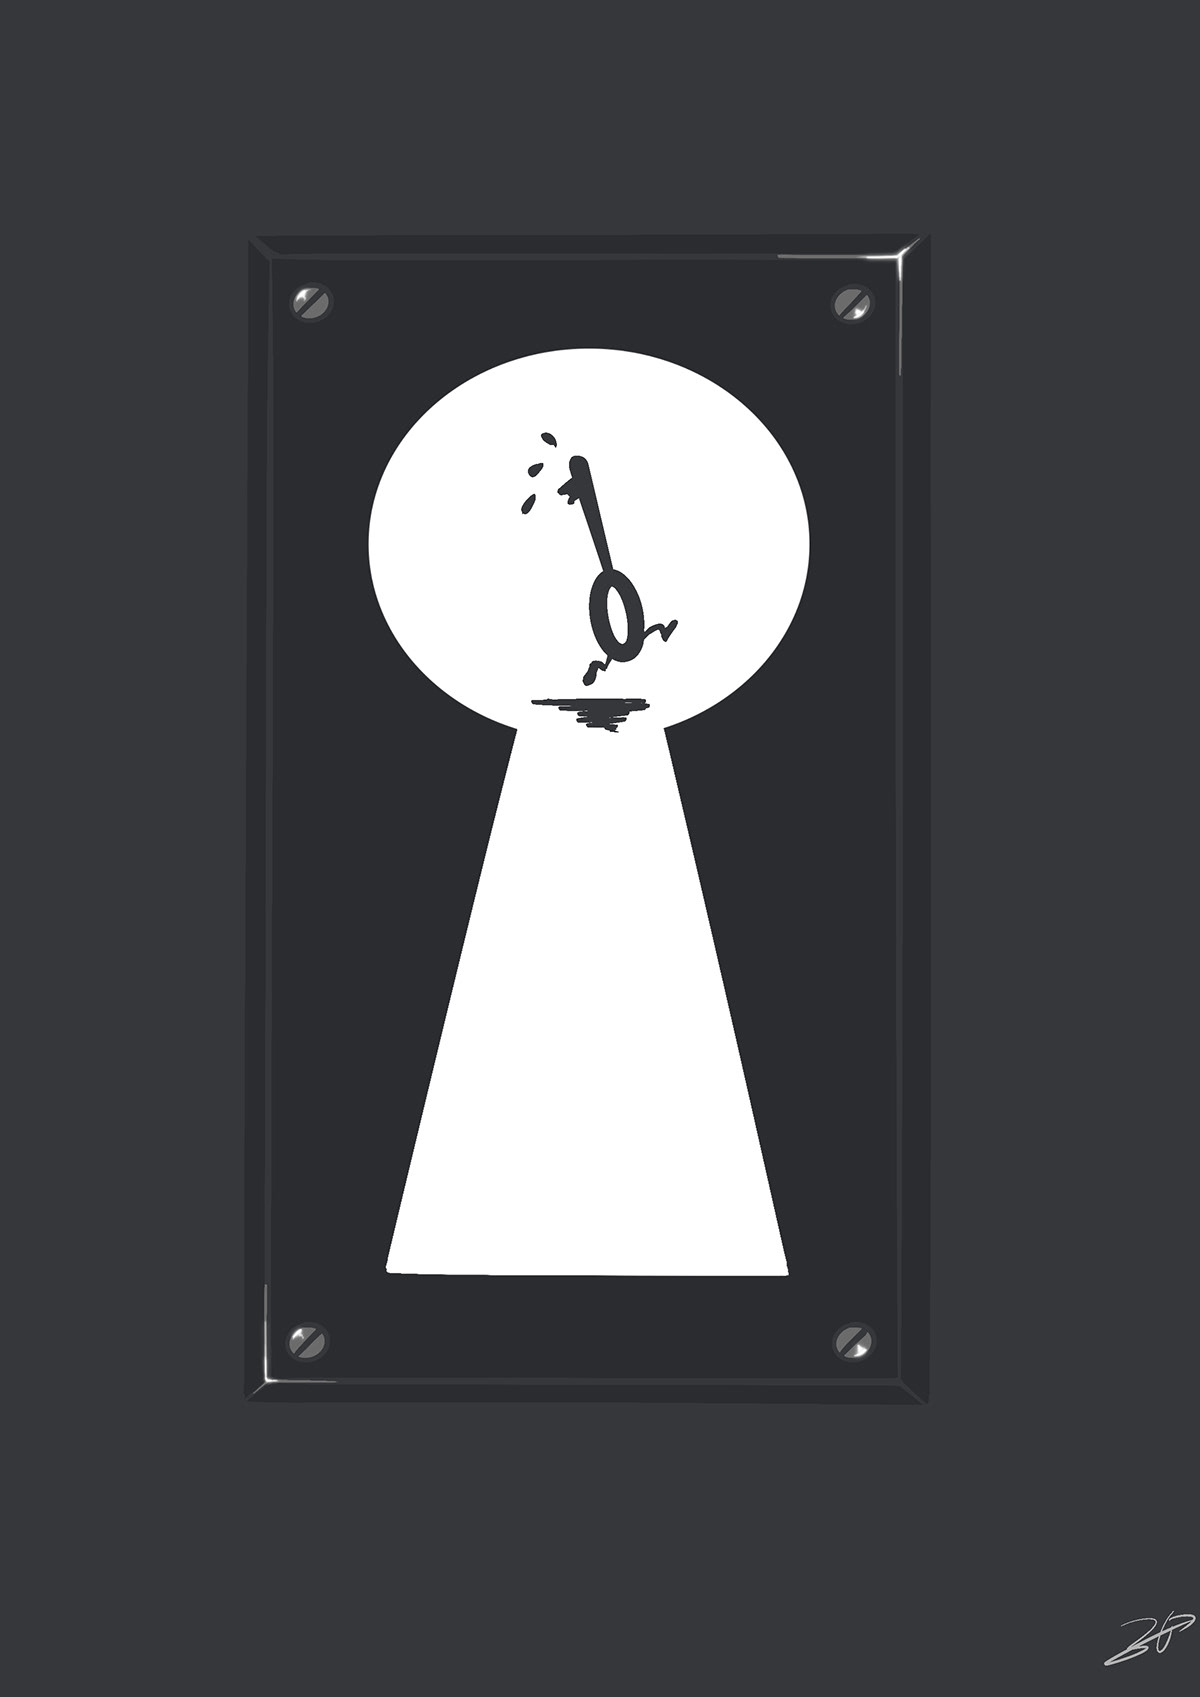 keyhole door freedom humour monochrome minimal Logo Design Fun escape shapes design